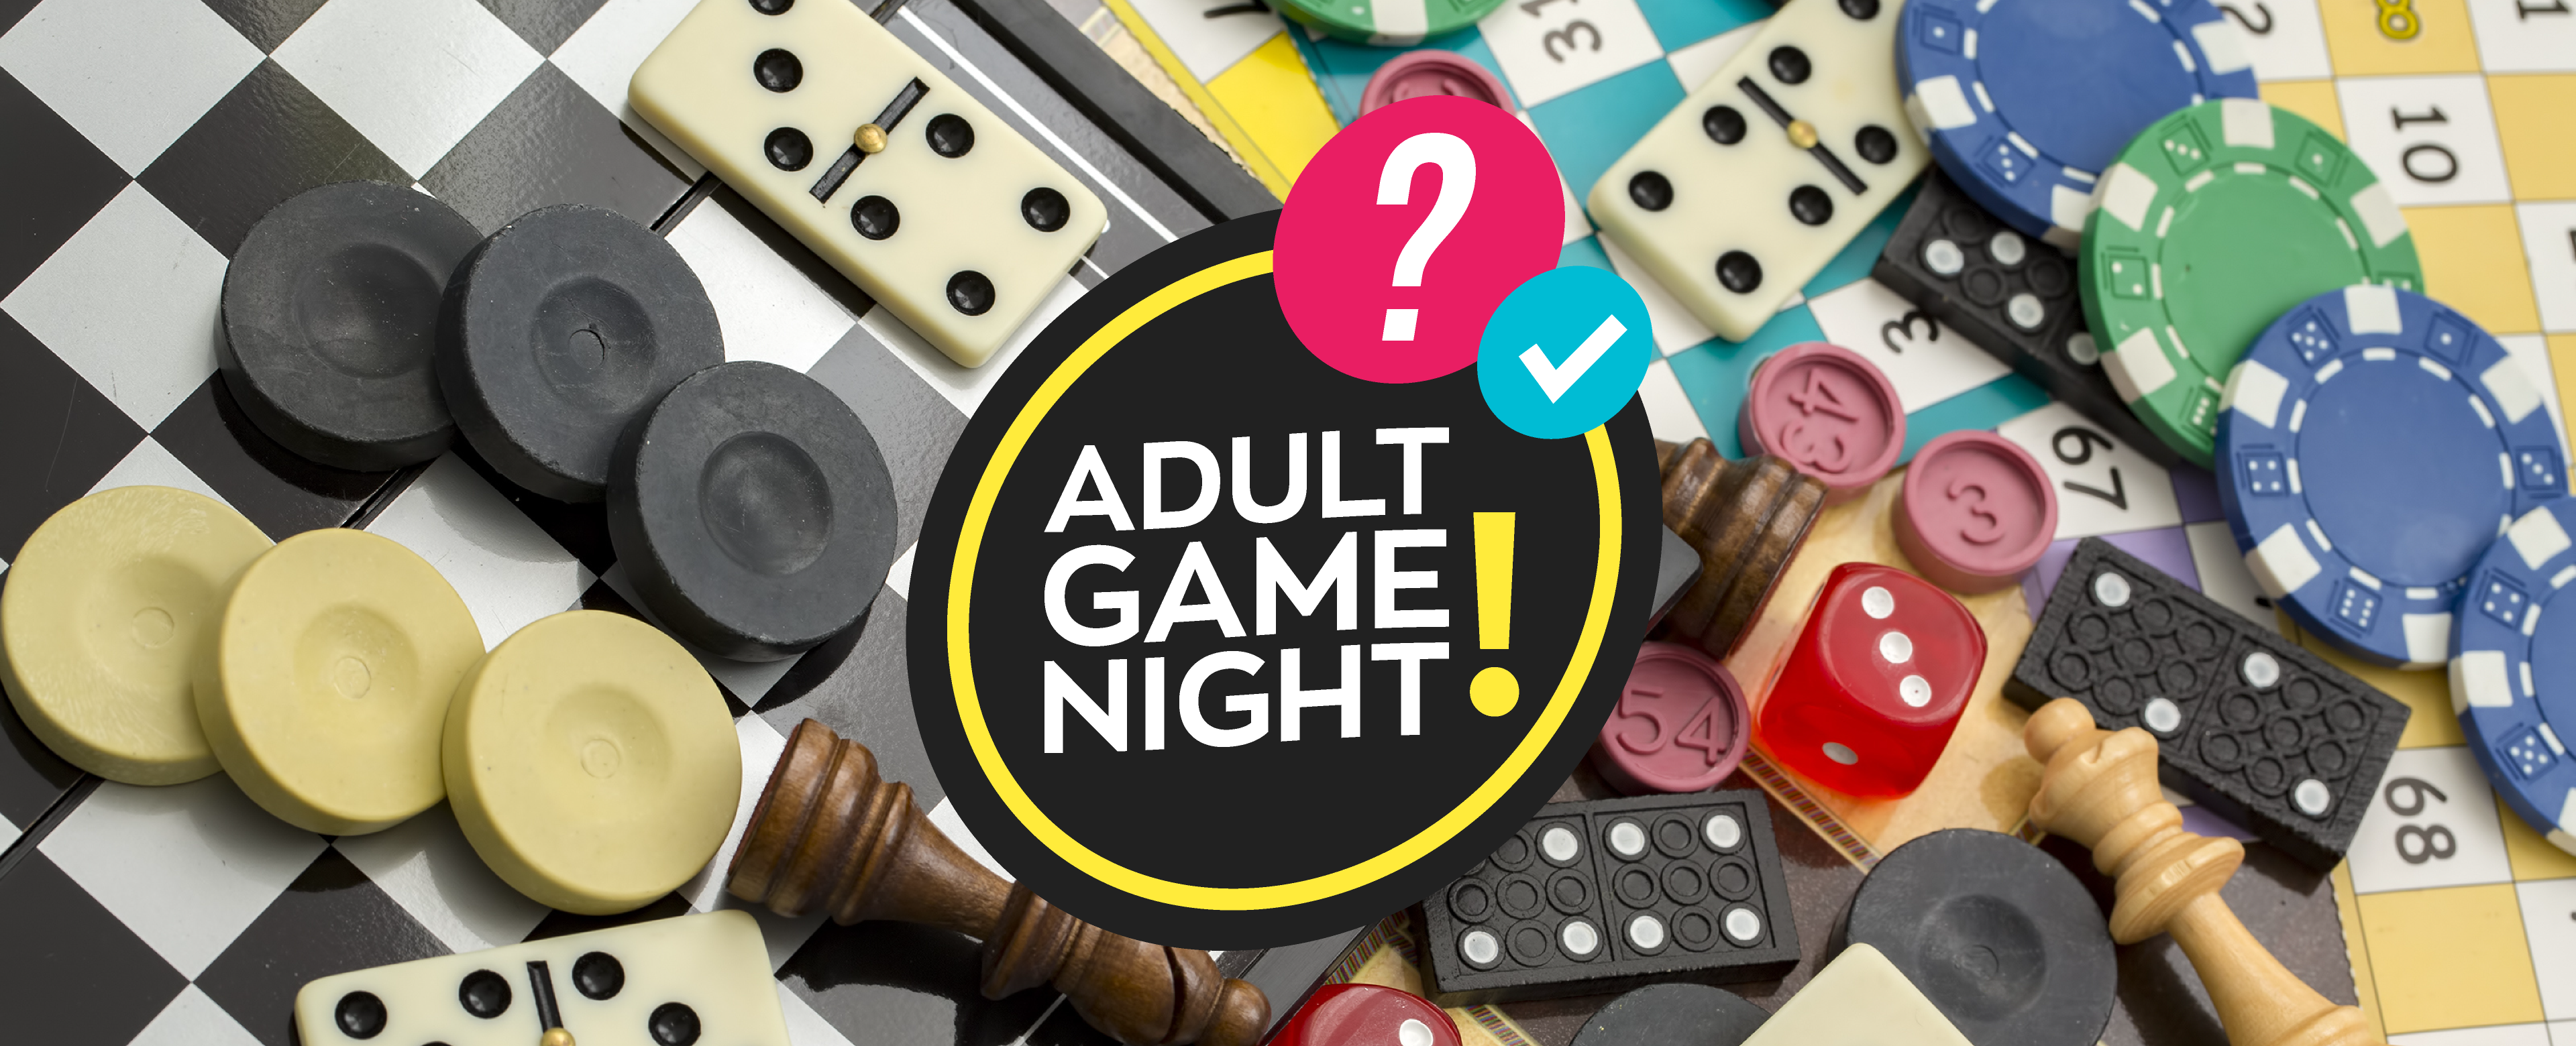 Adult Game Night!